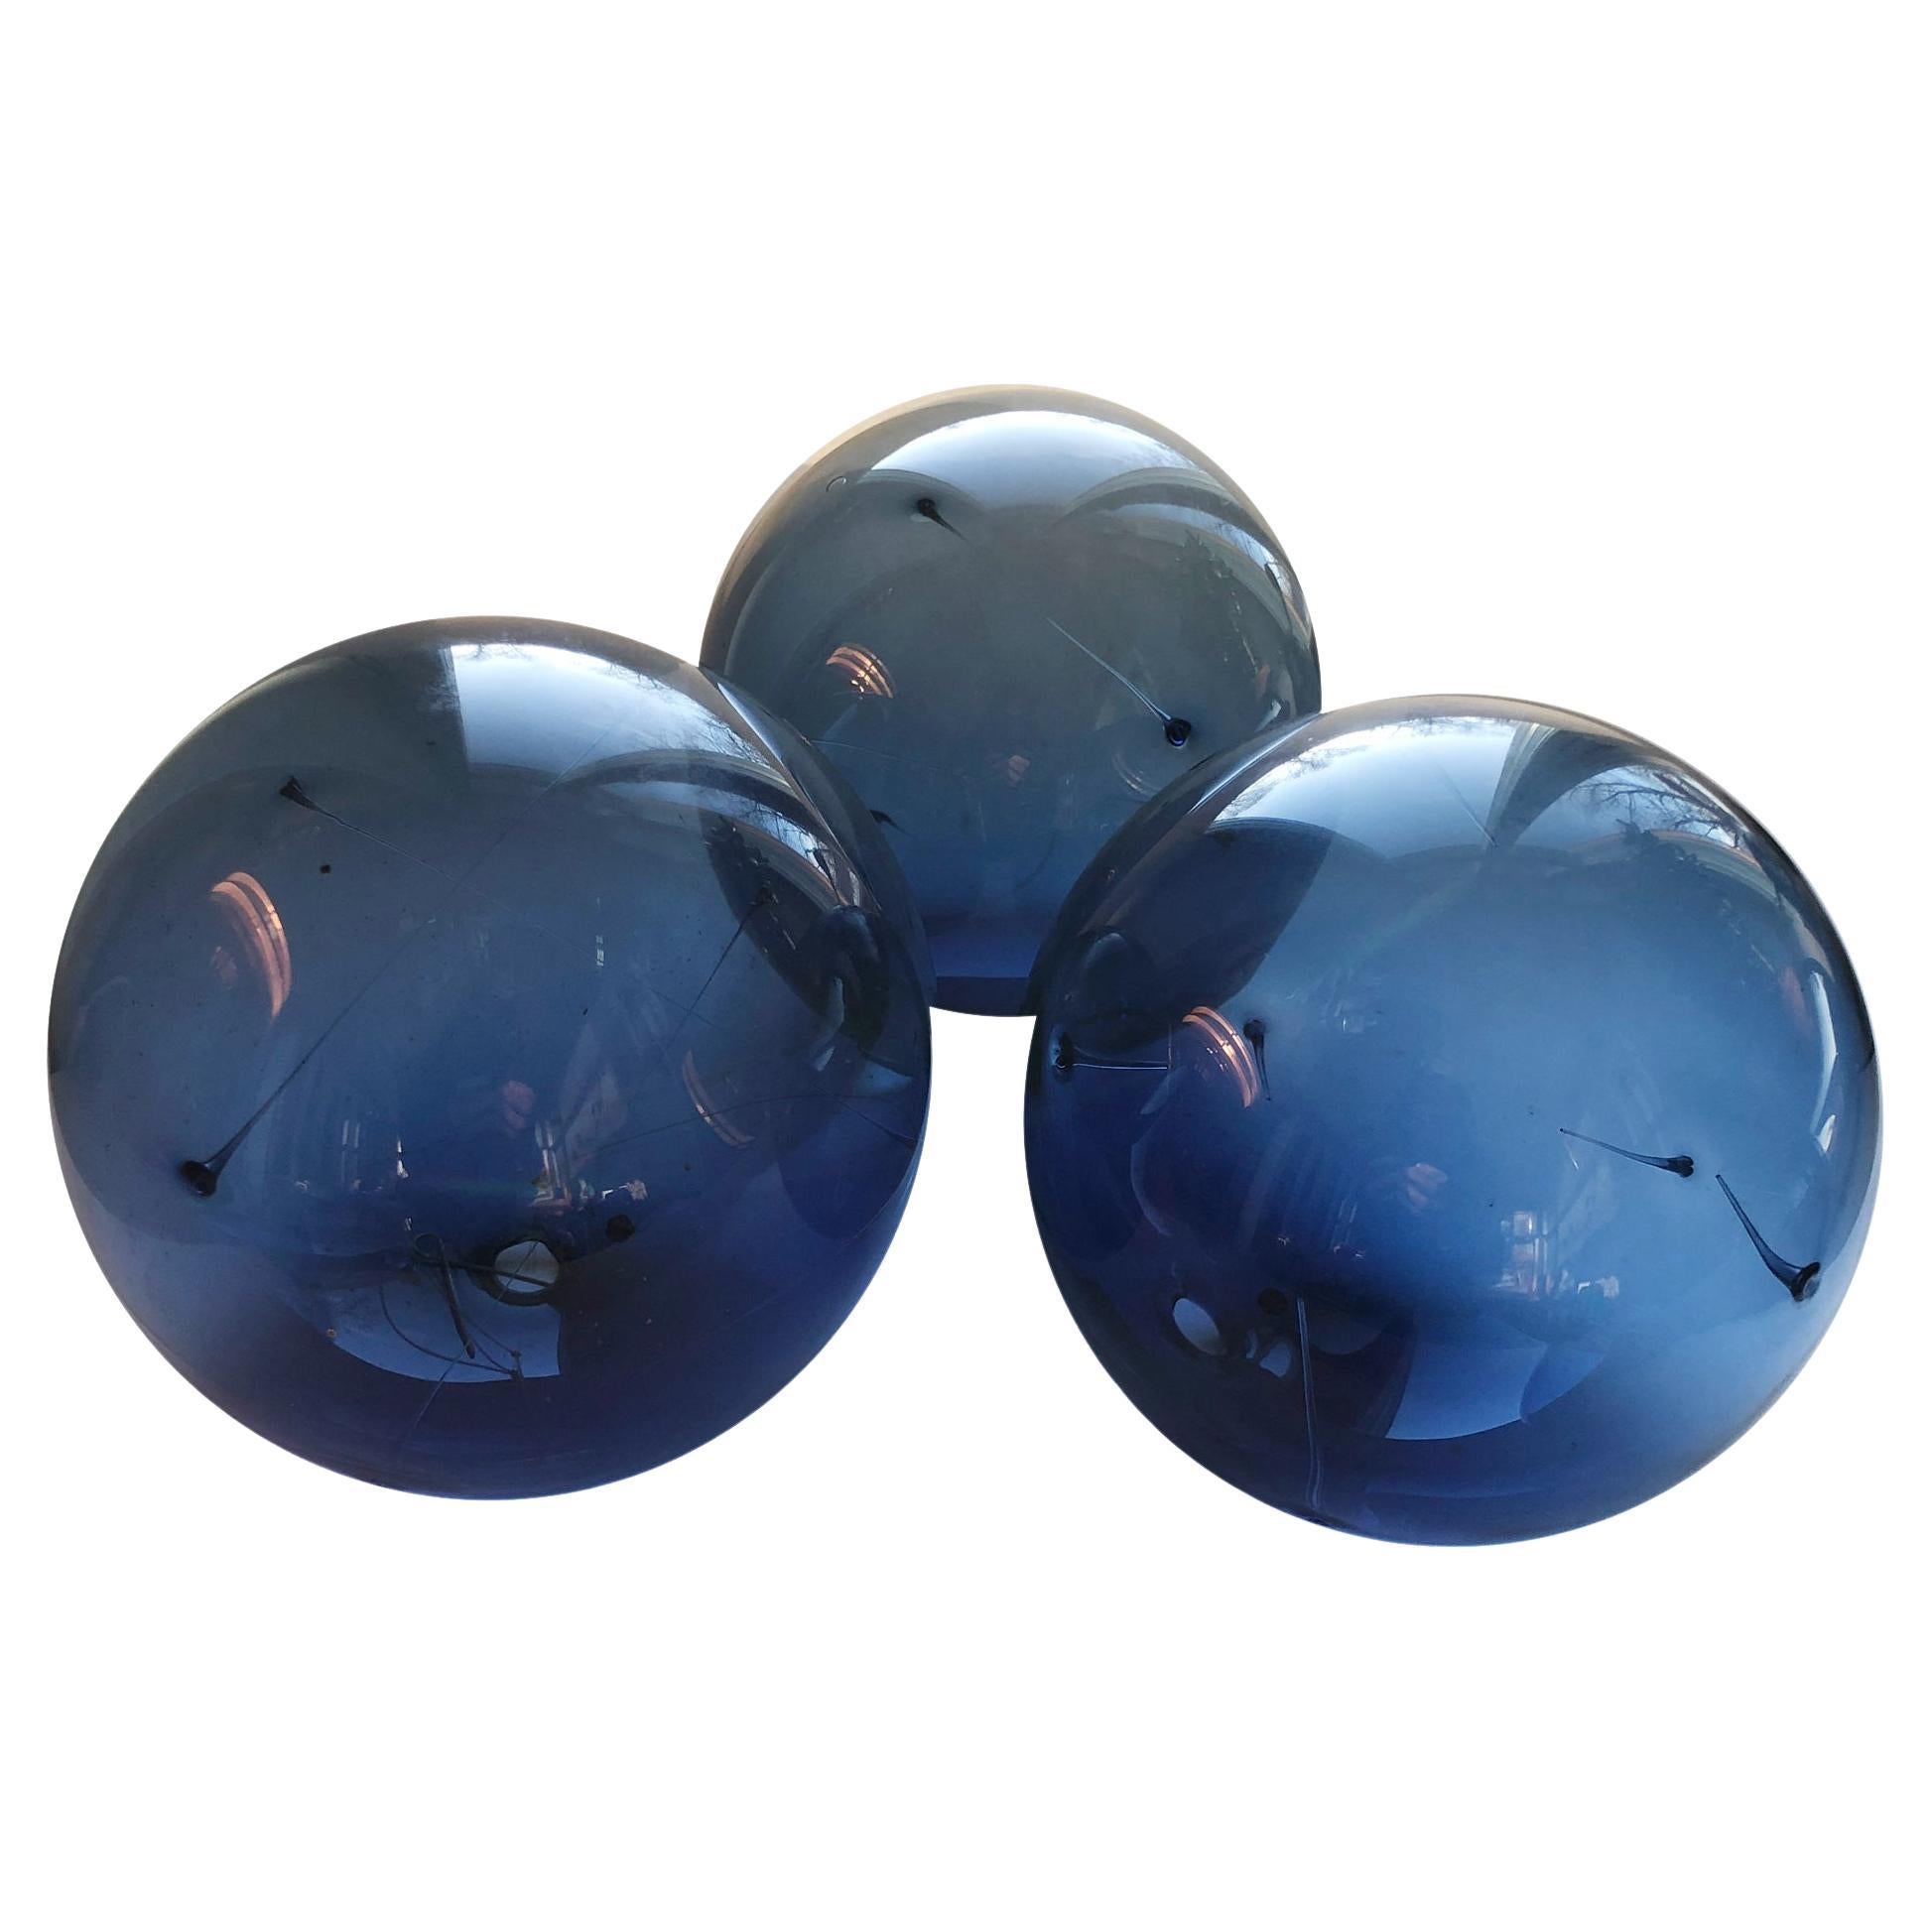 Three Blue Artglass Objects Solboll/Sunball by Timo Sarpaneva Iittala Signed TS For Sale